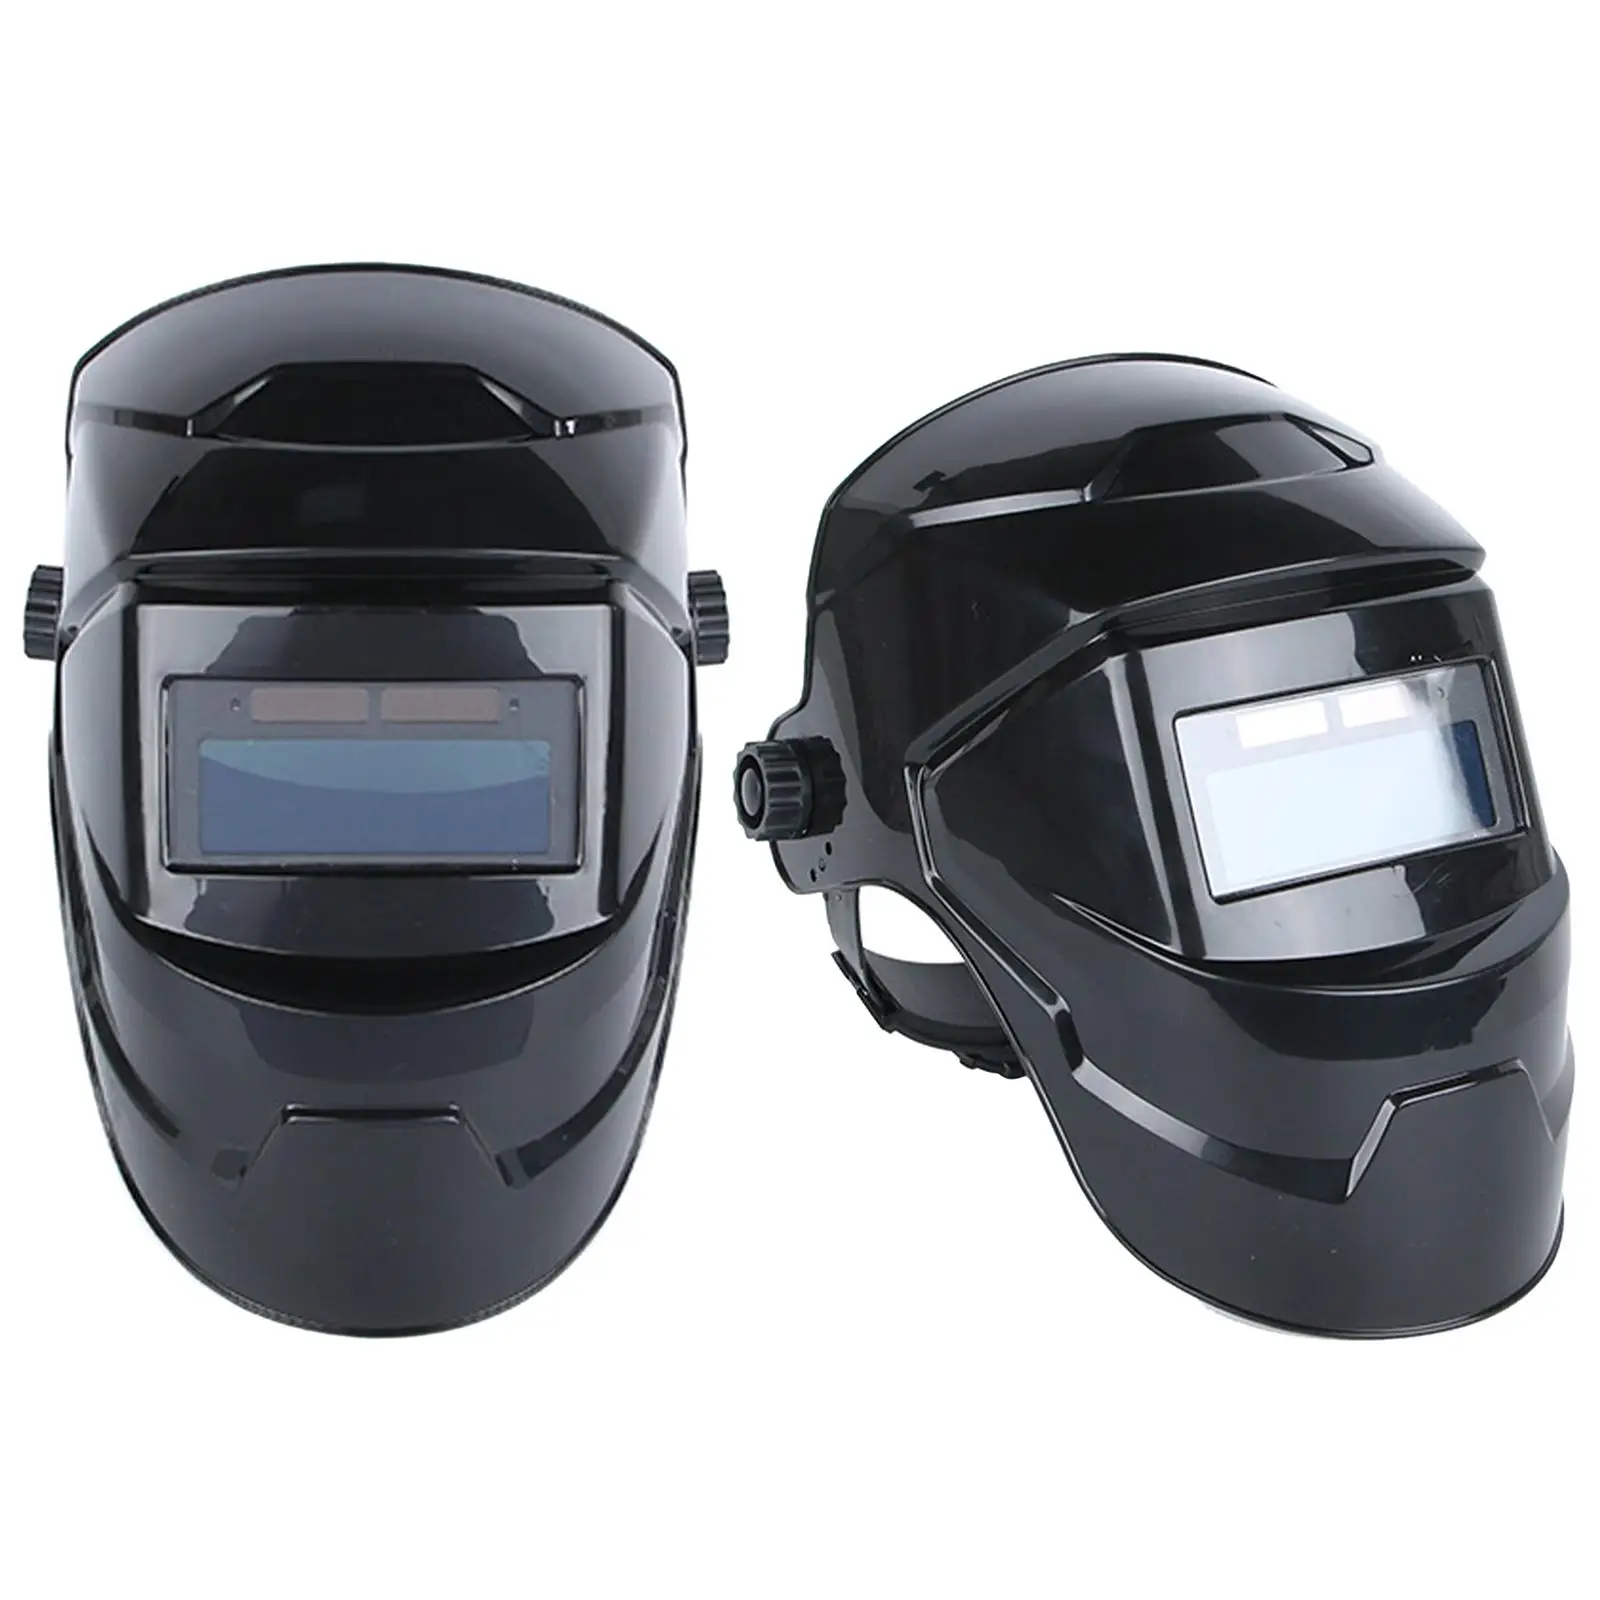 Large View Auto Darkening Welding Helmet Lightweight 180 Free Rotation Welding Hood Welding Helmet Welder Mask for TIG Mig ARC